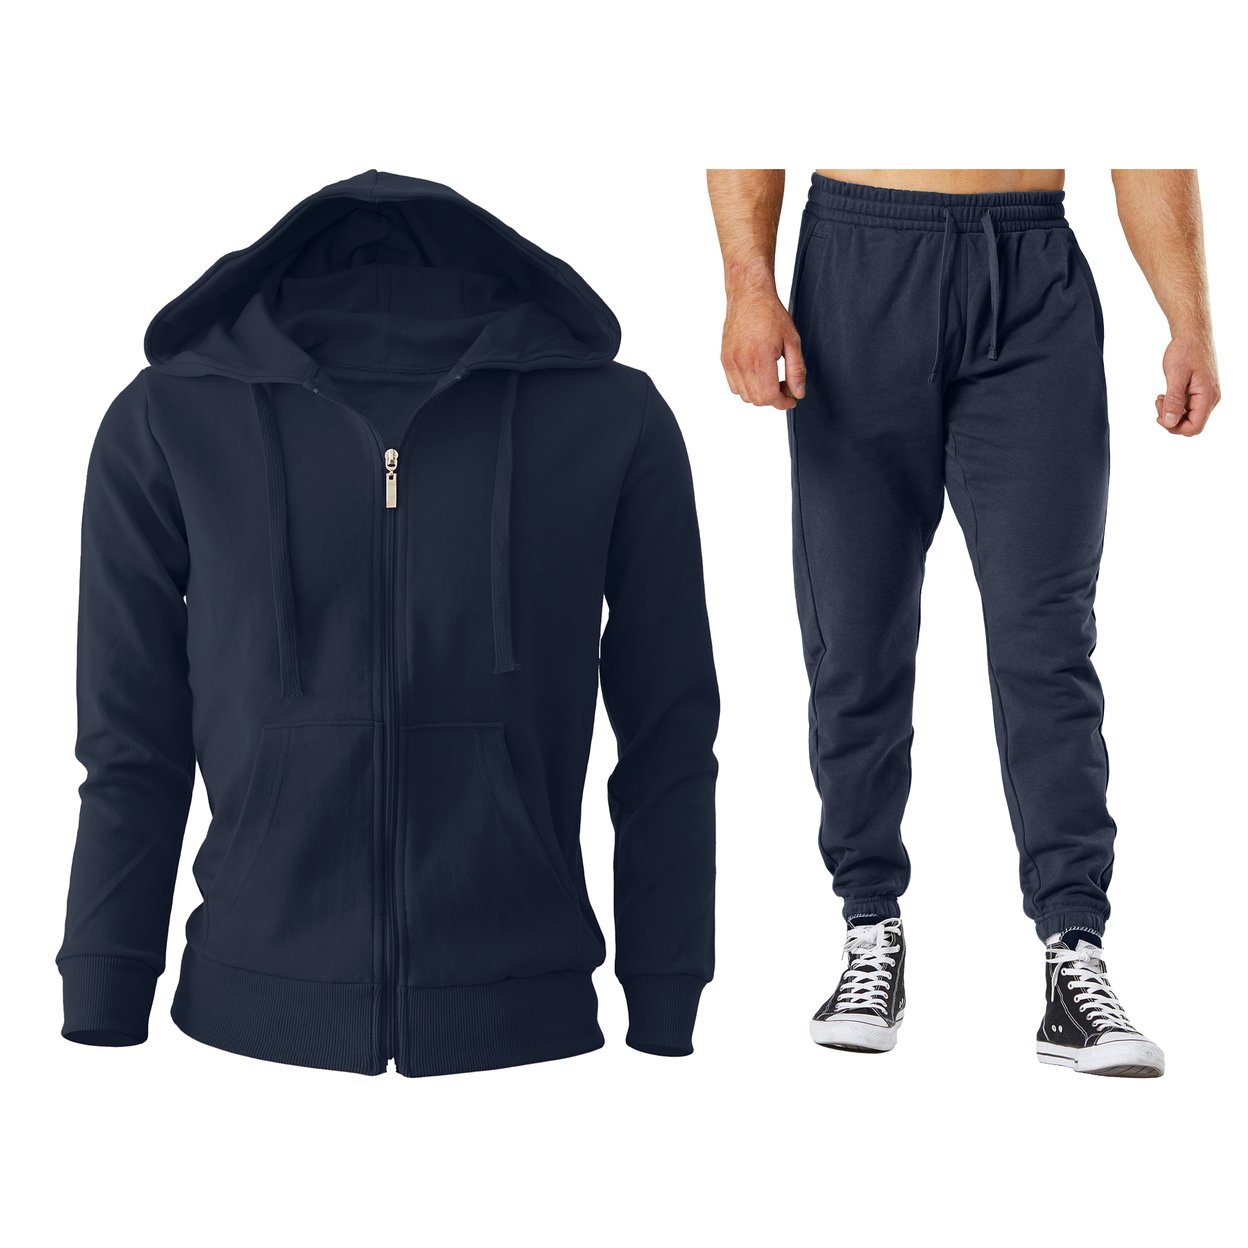 2/4-Piece: Men's Winter Warm Cozy Athletic Multi-Pockets BIG & TALL Sweatsuit Set - Navy, 2, X-large